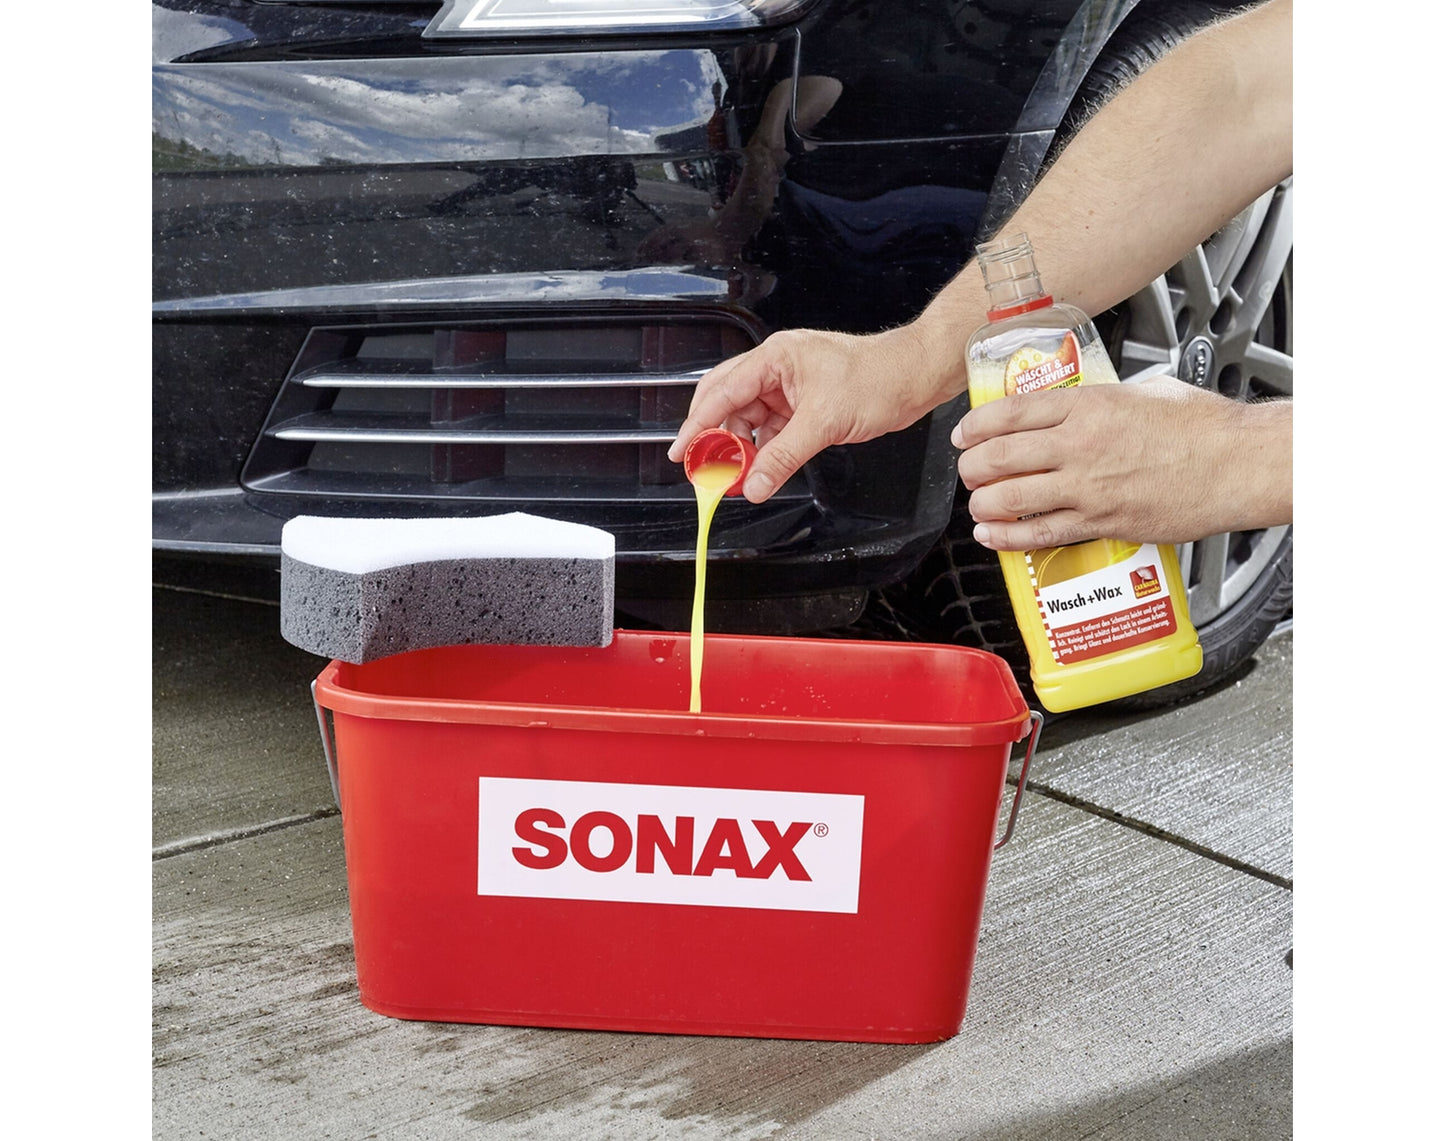 Sonax Carnauba Wasch + Wax (1 Liter)